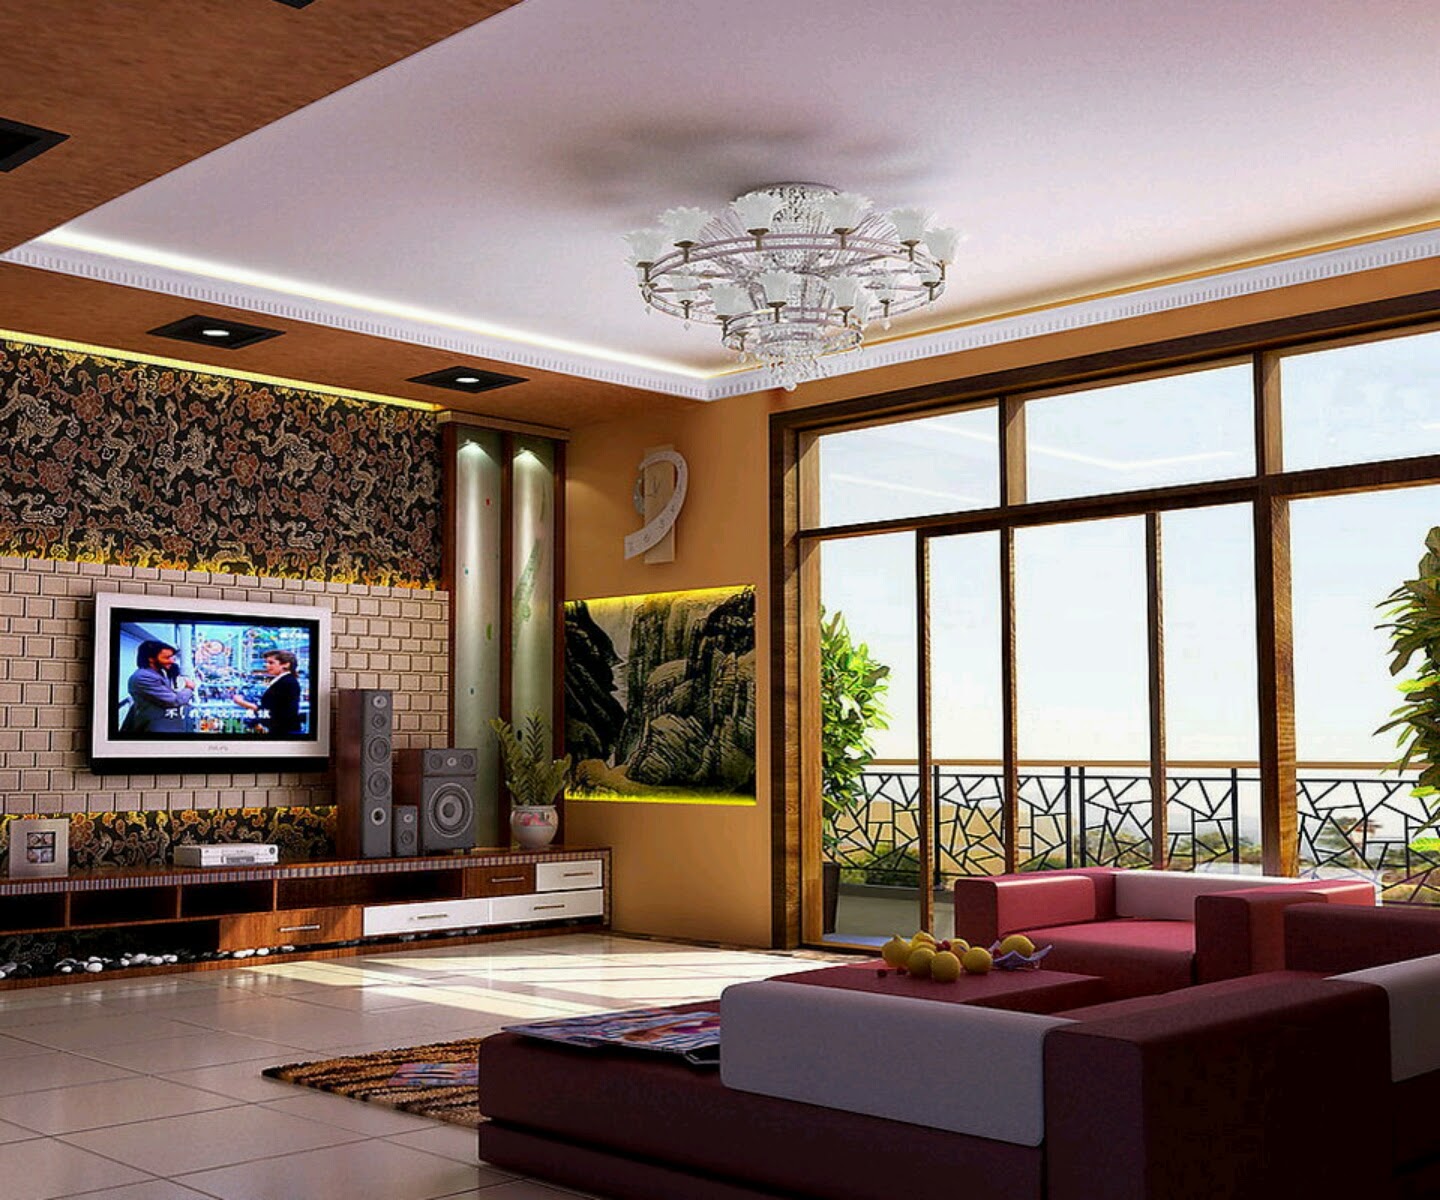 wallpapers hd home design,ceiling,living room,interior design,room,furniture